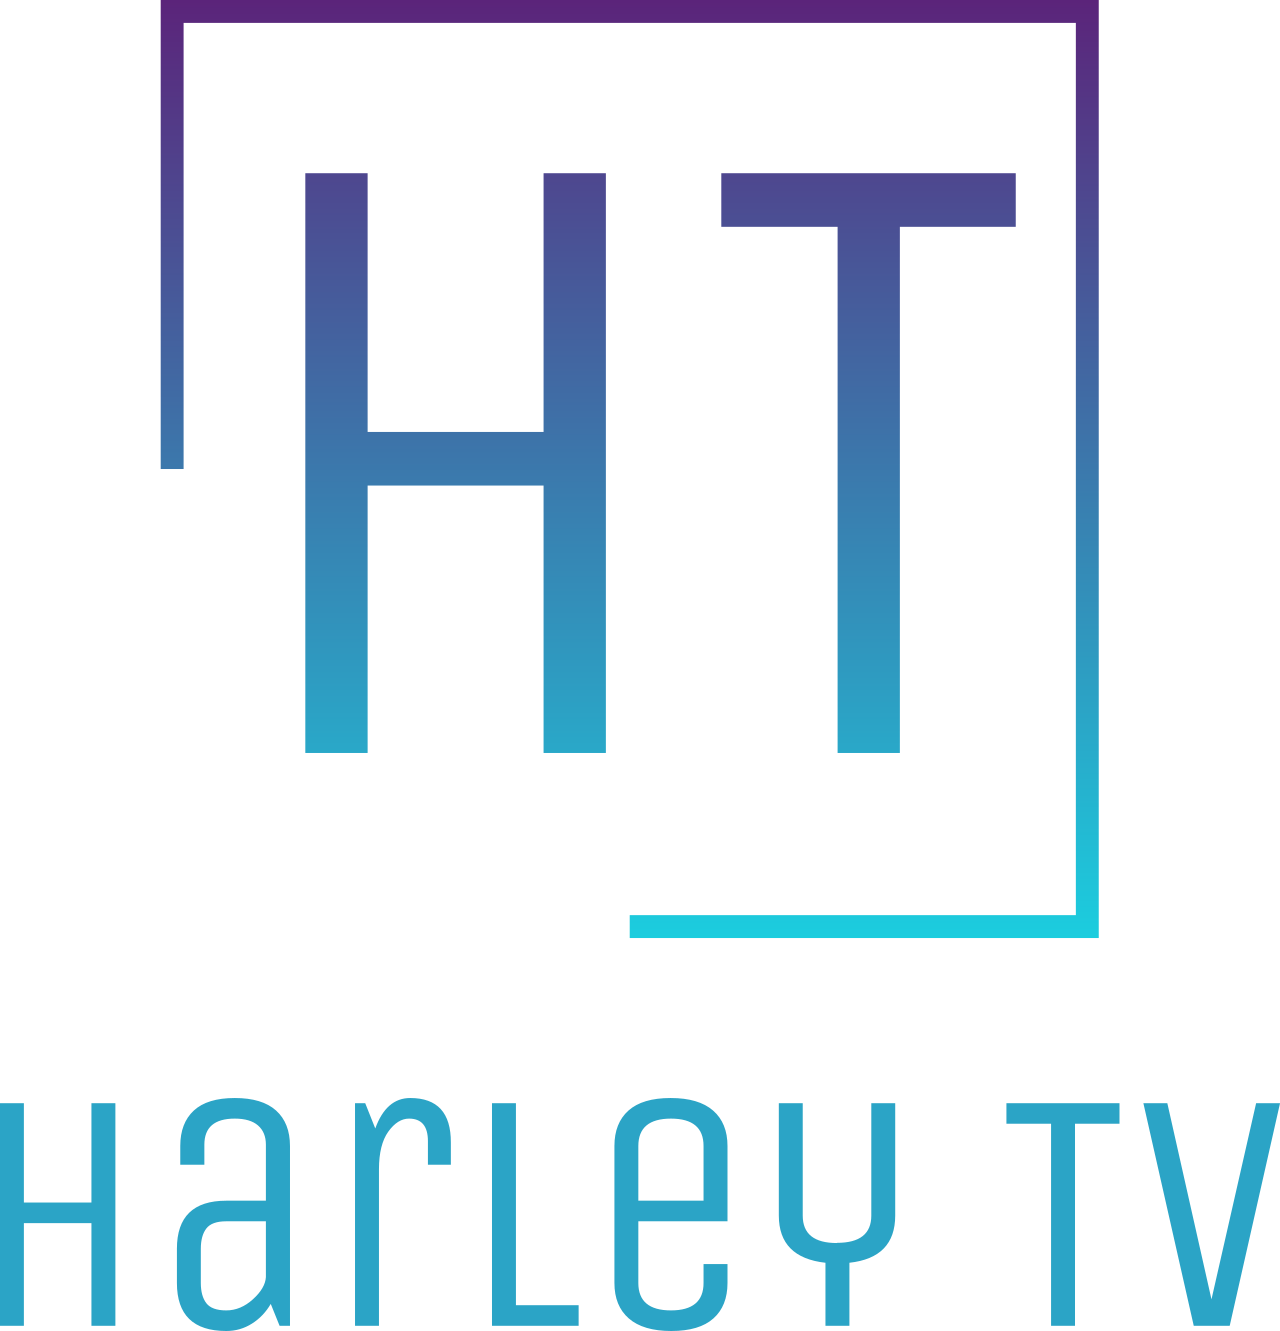 Harley TV's logo